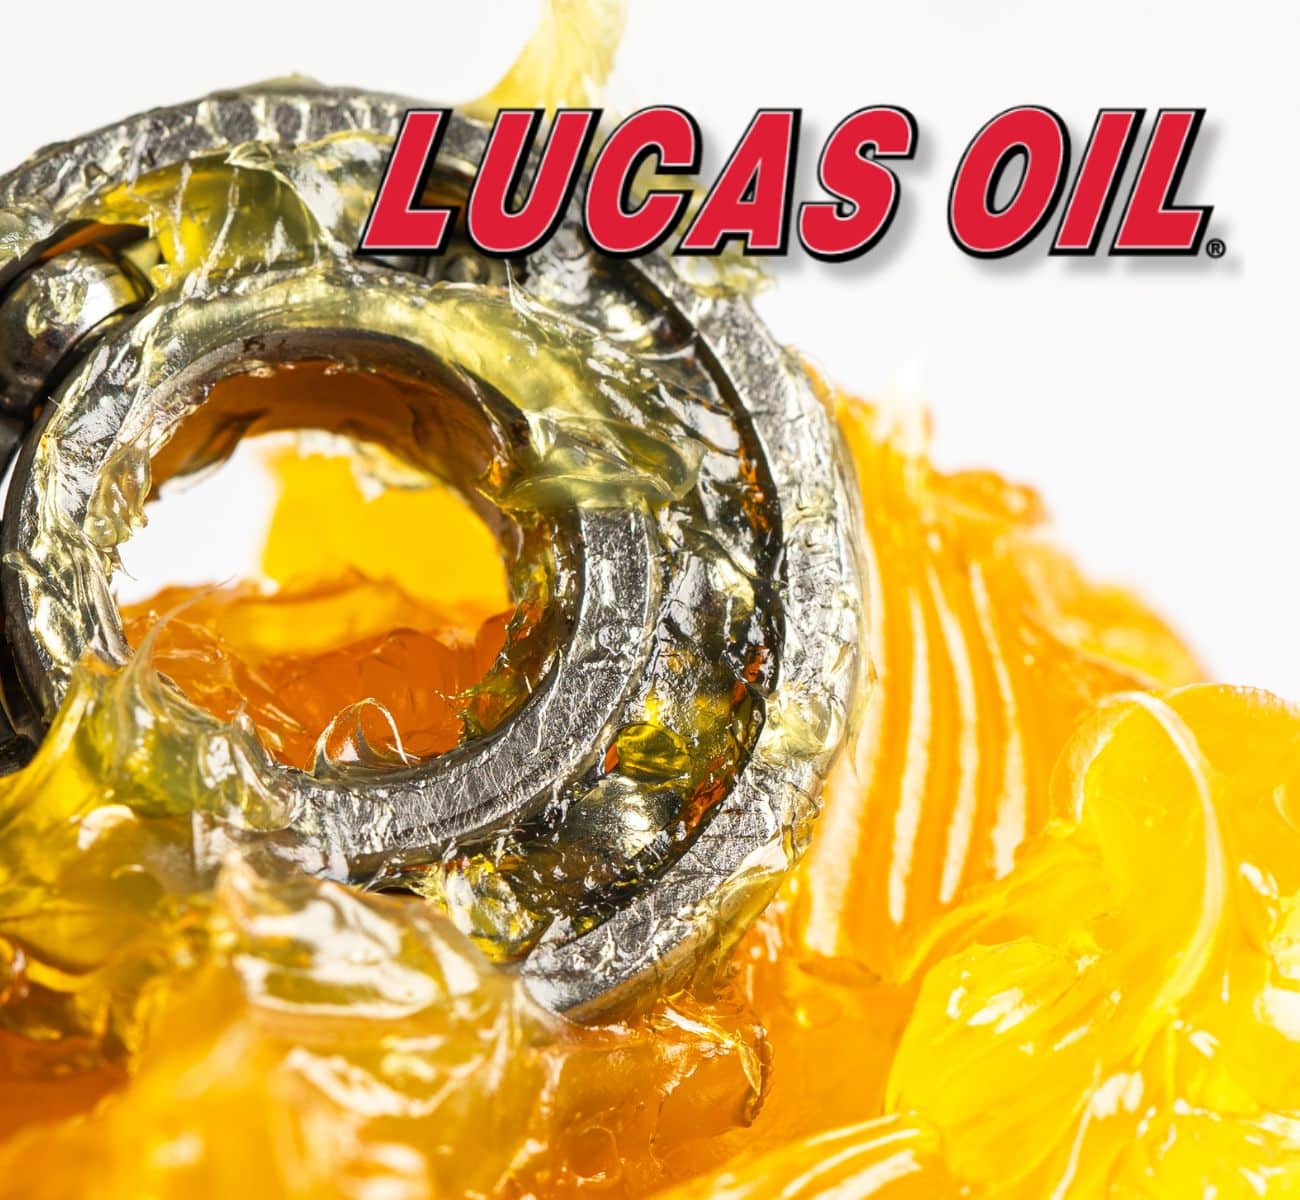 Lucas Oil premium motor oils will reach South American markets through VT Batteries.